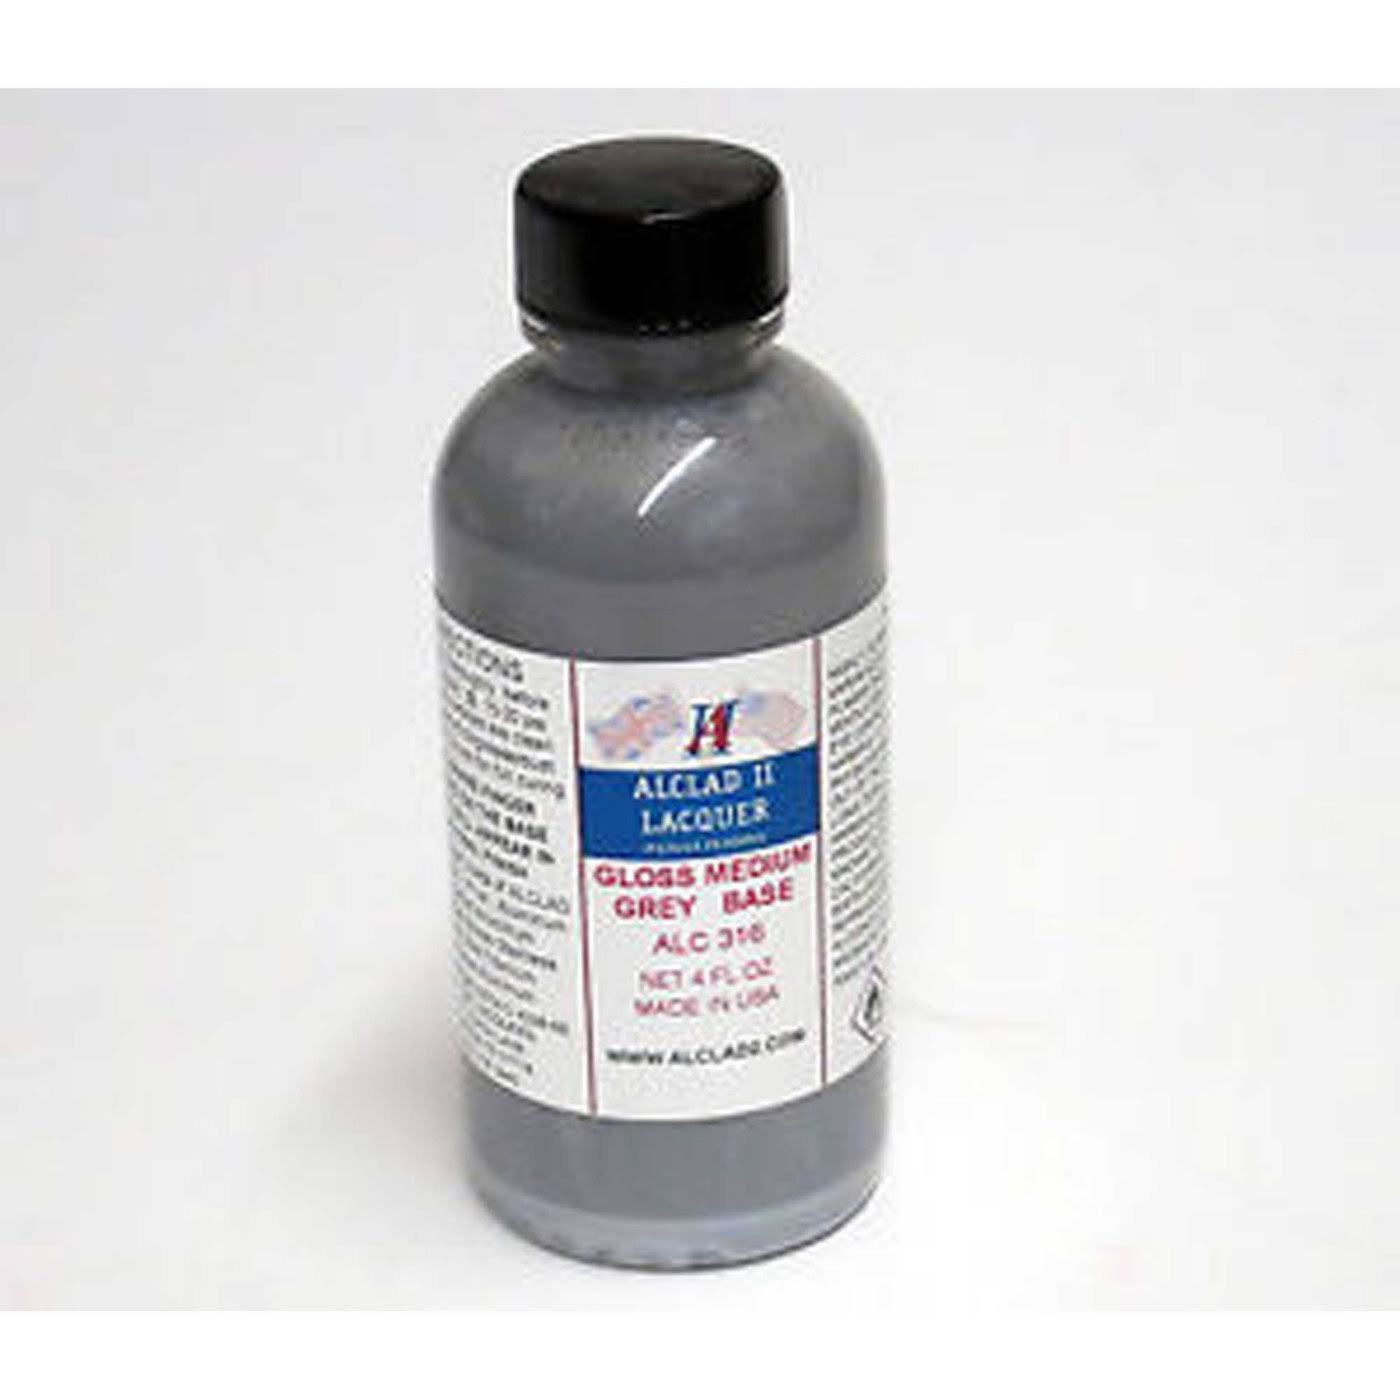 Alclad II 316 Gloss Medium Grey Base 4oz Bottle